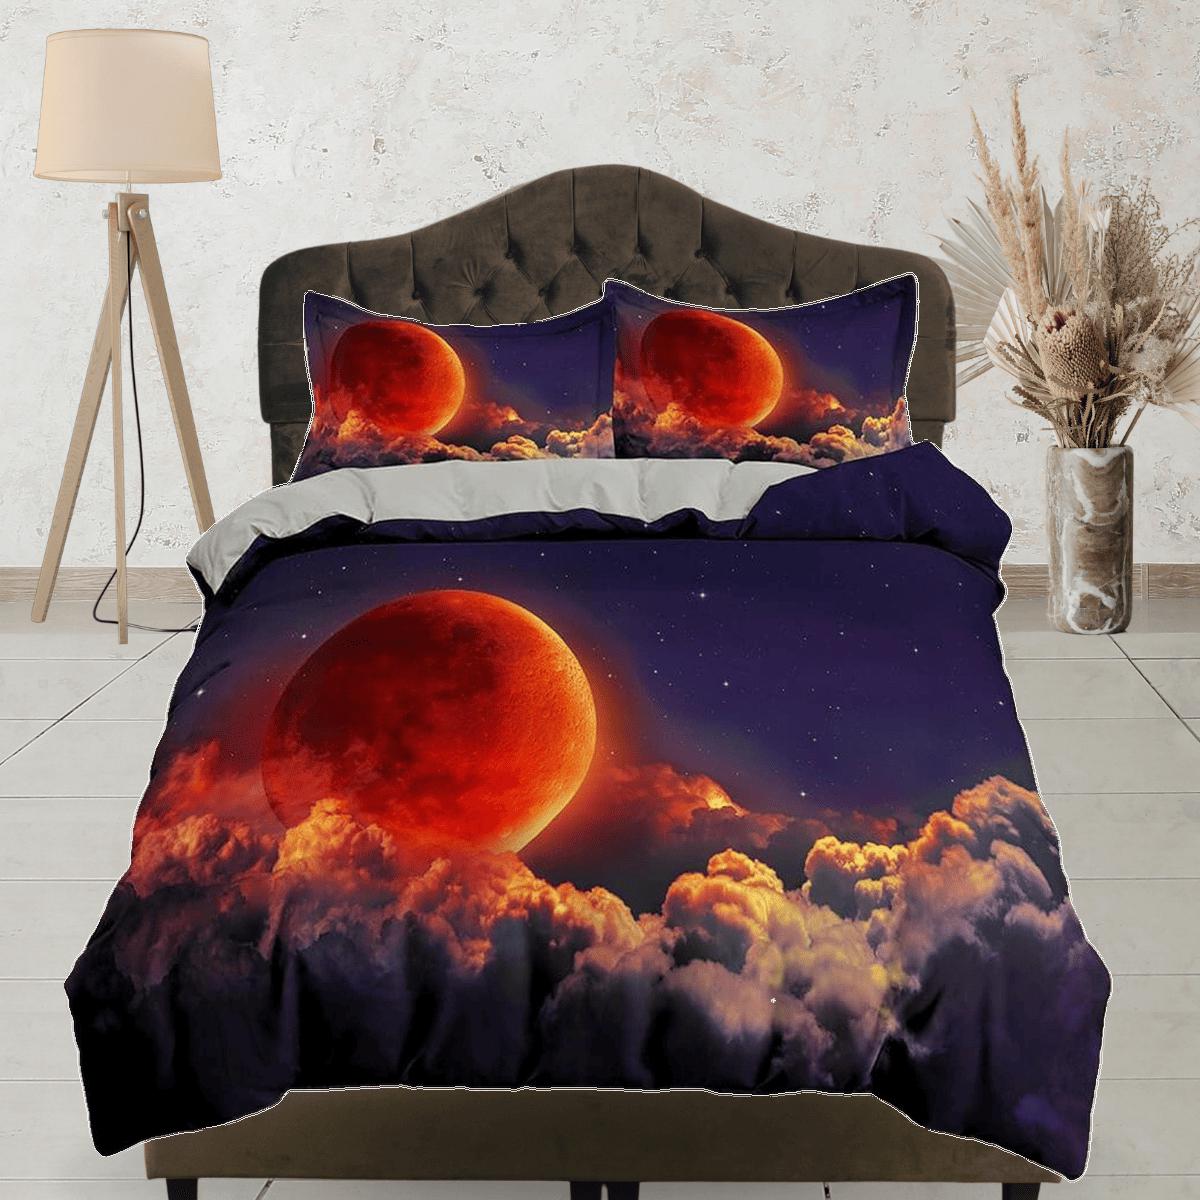 daintyduvet Red moon duvet cover set galaxy bedding, space bedding set full, duvet cover king, queen, dorm bedding, toddler bedding